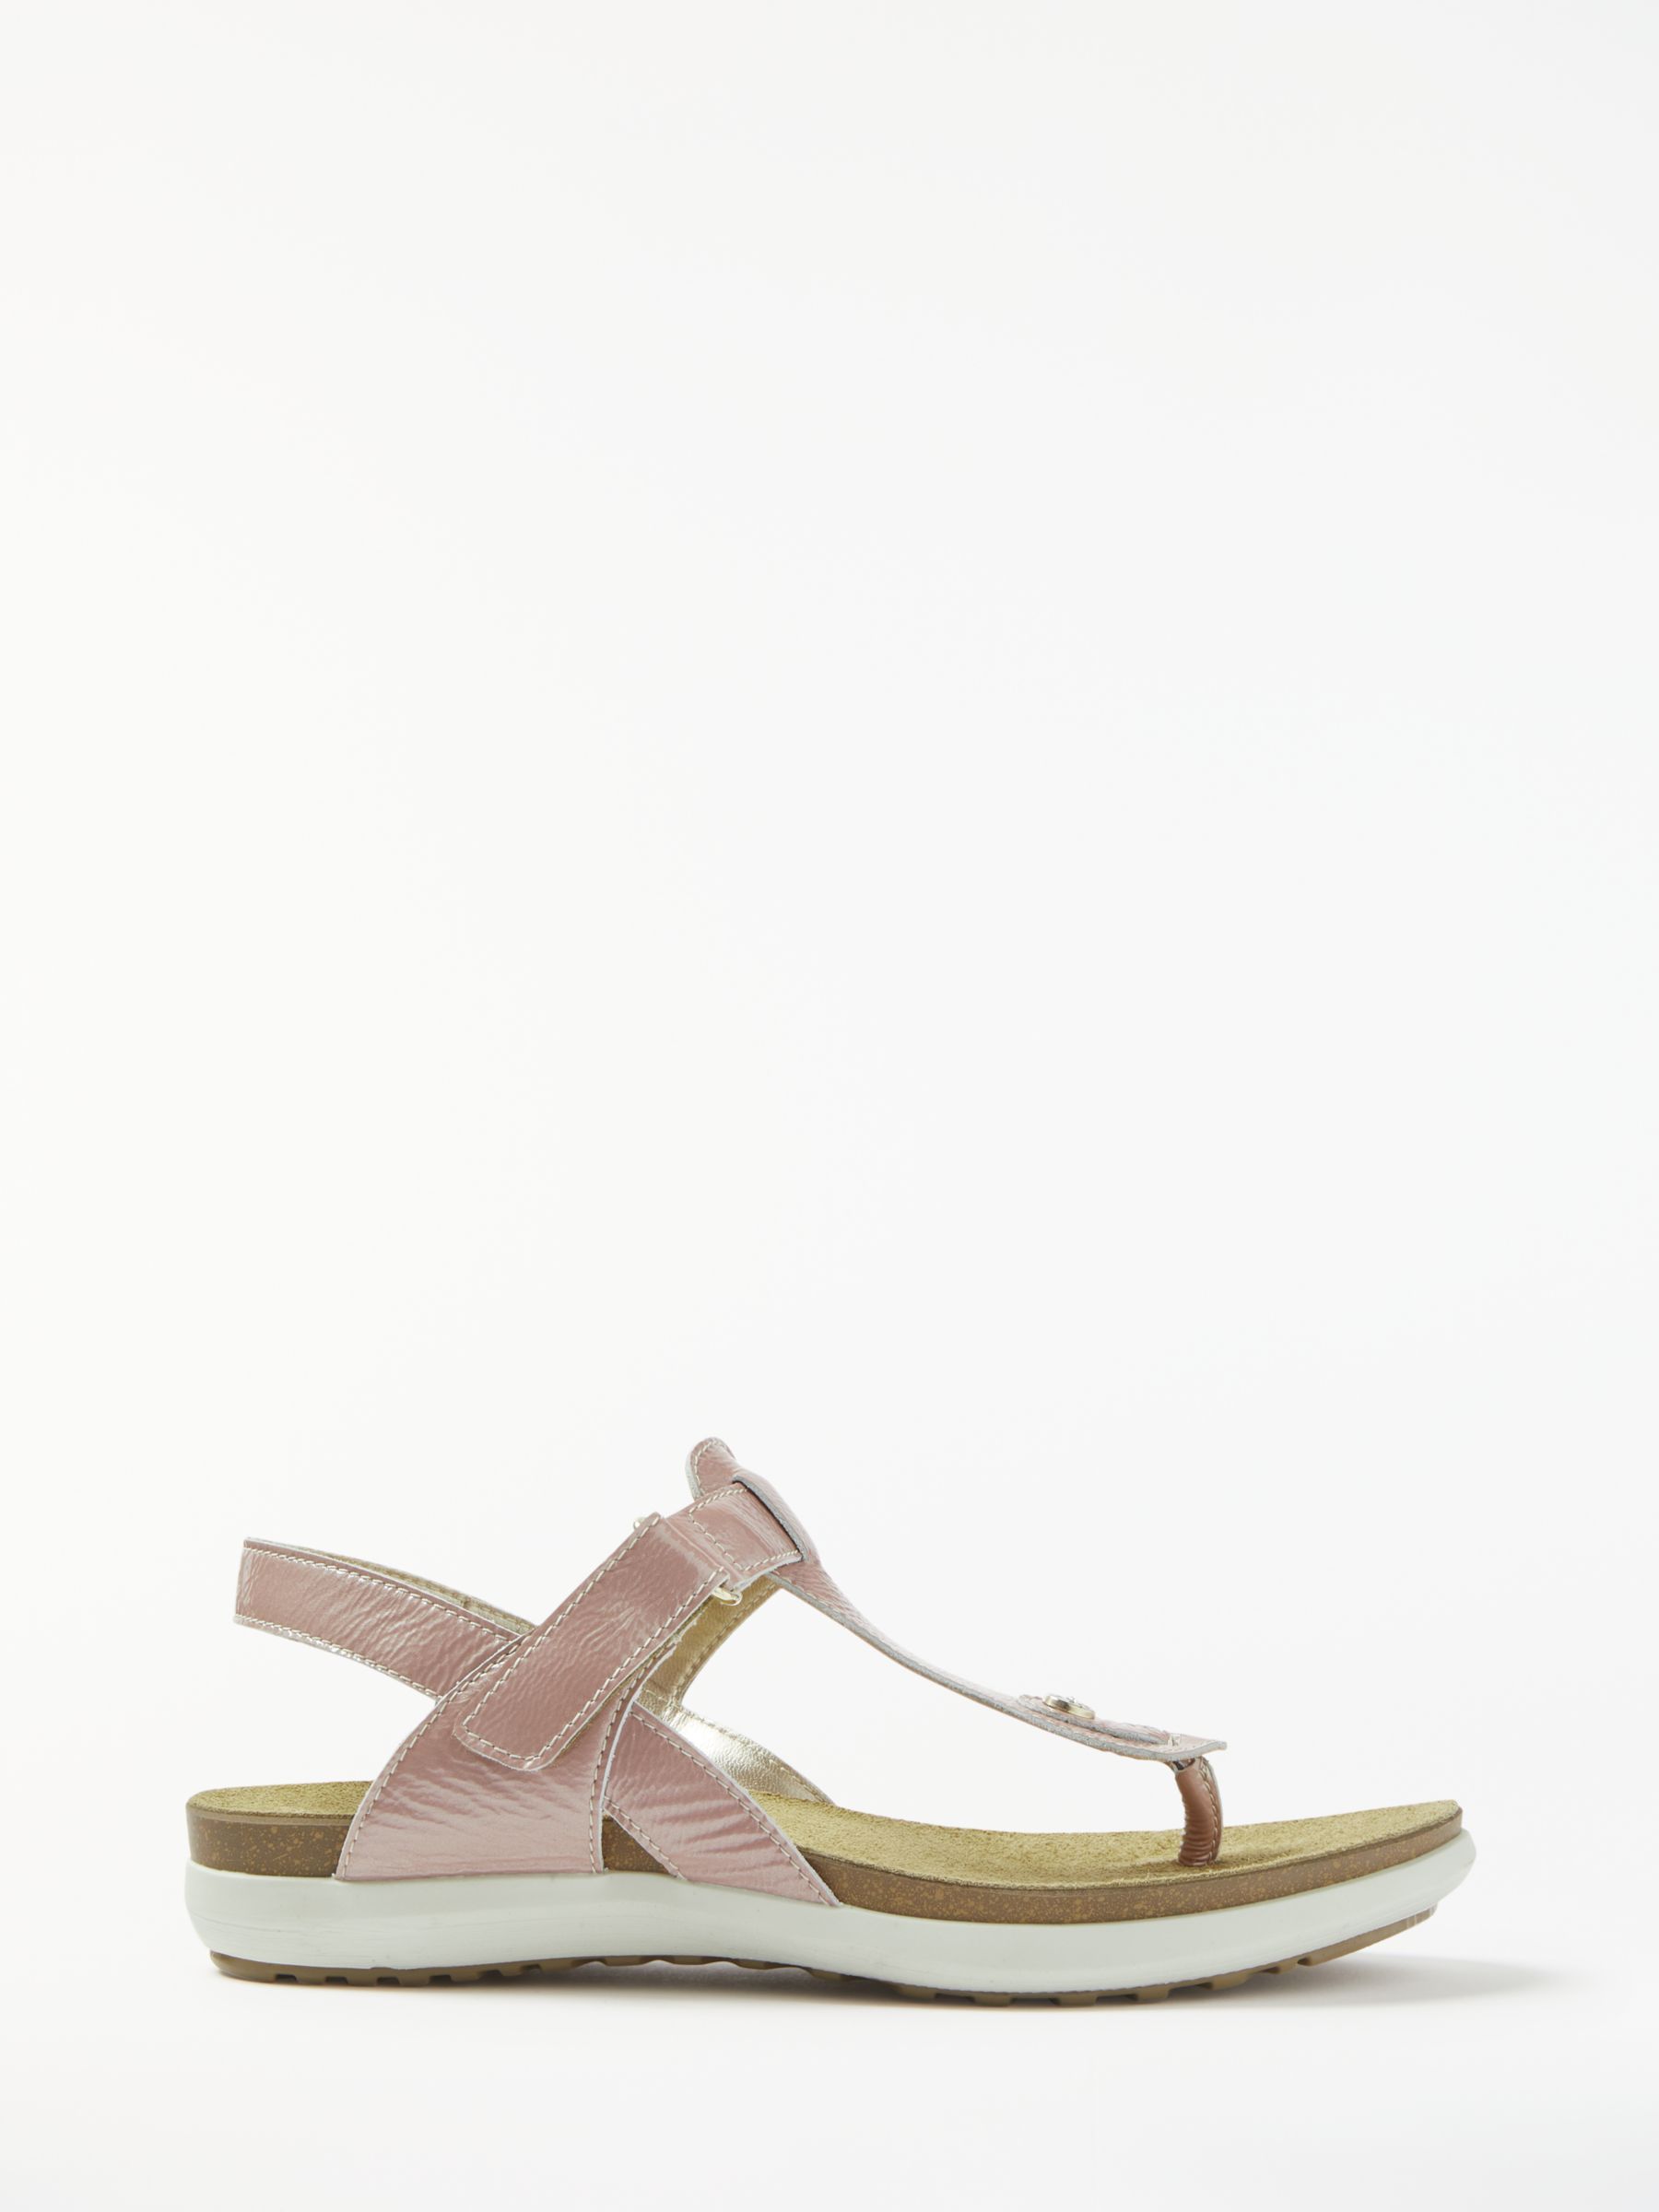 John Lewis & Partners Designed for Comfort Luella Toe Post Sandals, Pink